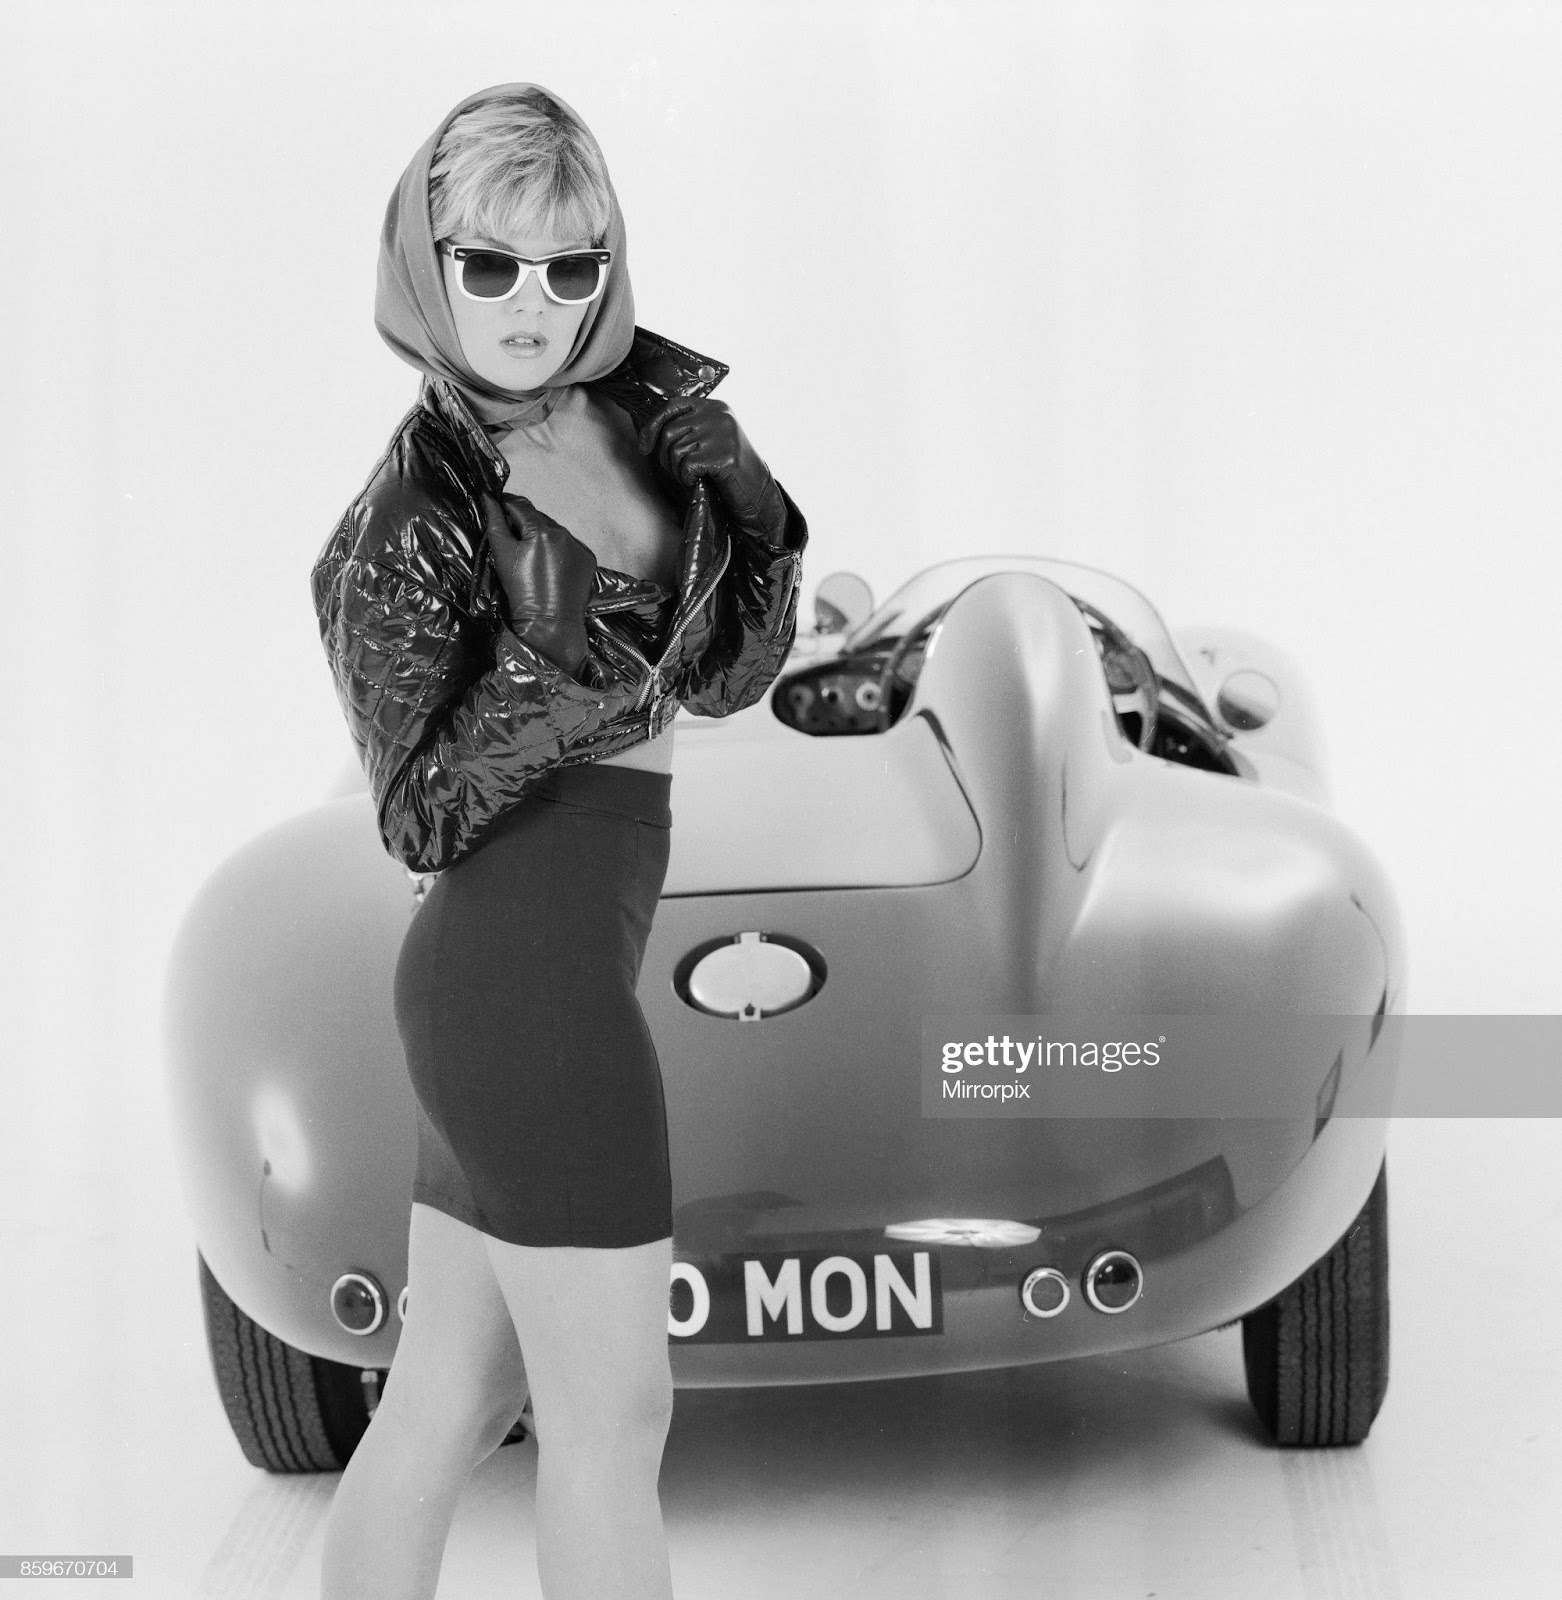 D:\Documenti\posts\posts\Women and motorsport\foto\1988\glamour-model-caroline-delahunty-poses-next-to-a-ferrari-19th-april-picture-id859670704.jpg